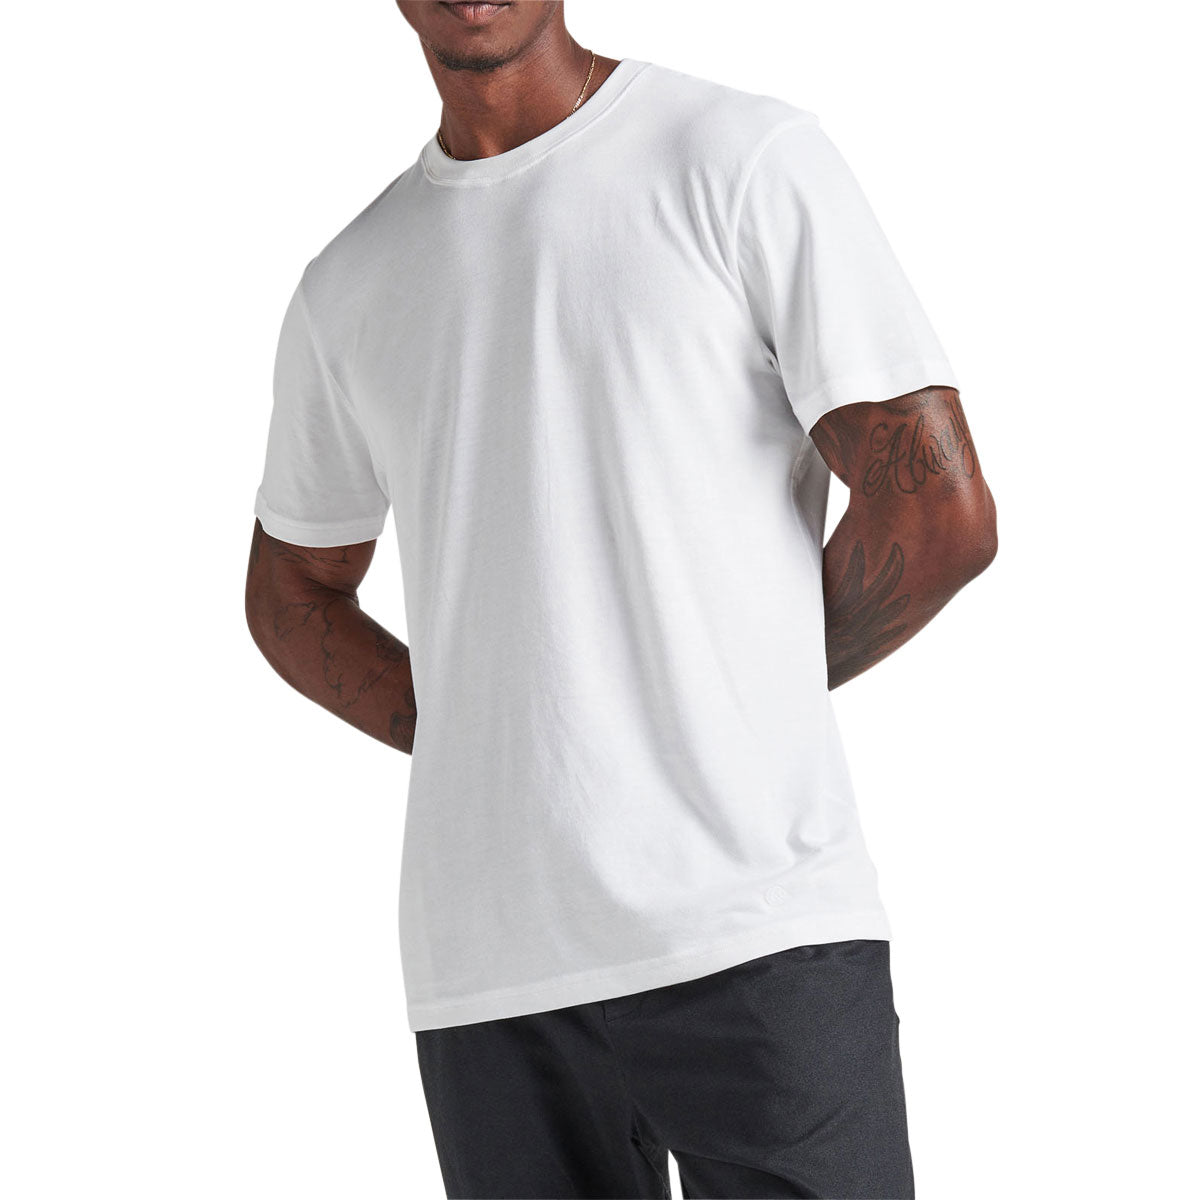 Stance Butter Blend T-Shirt - White image 2